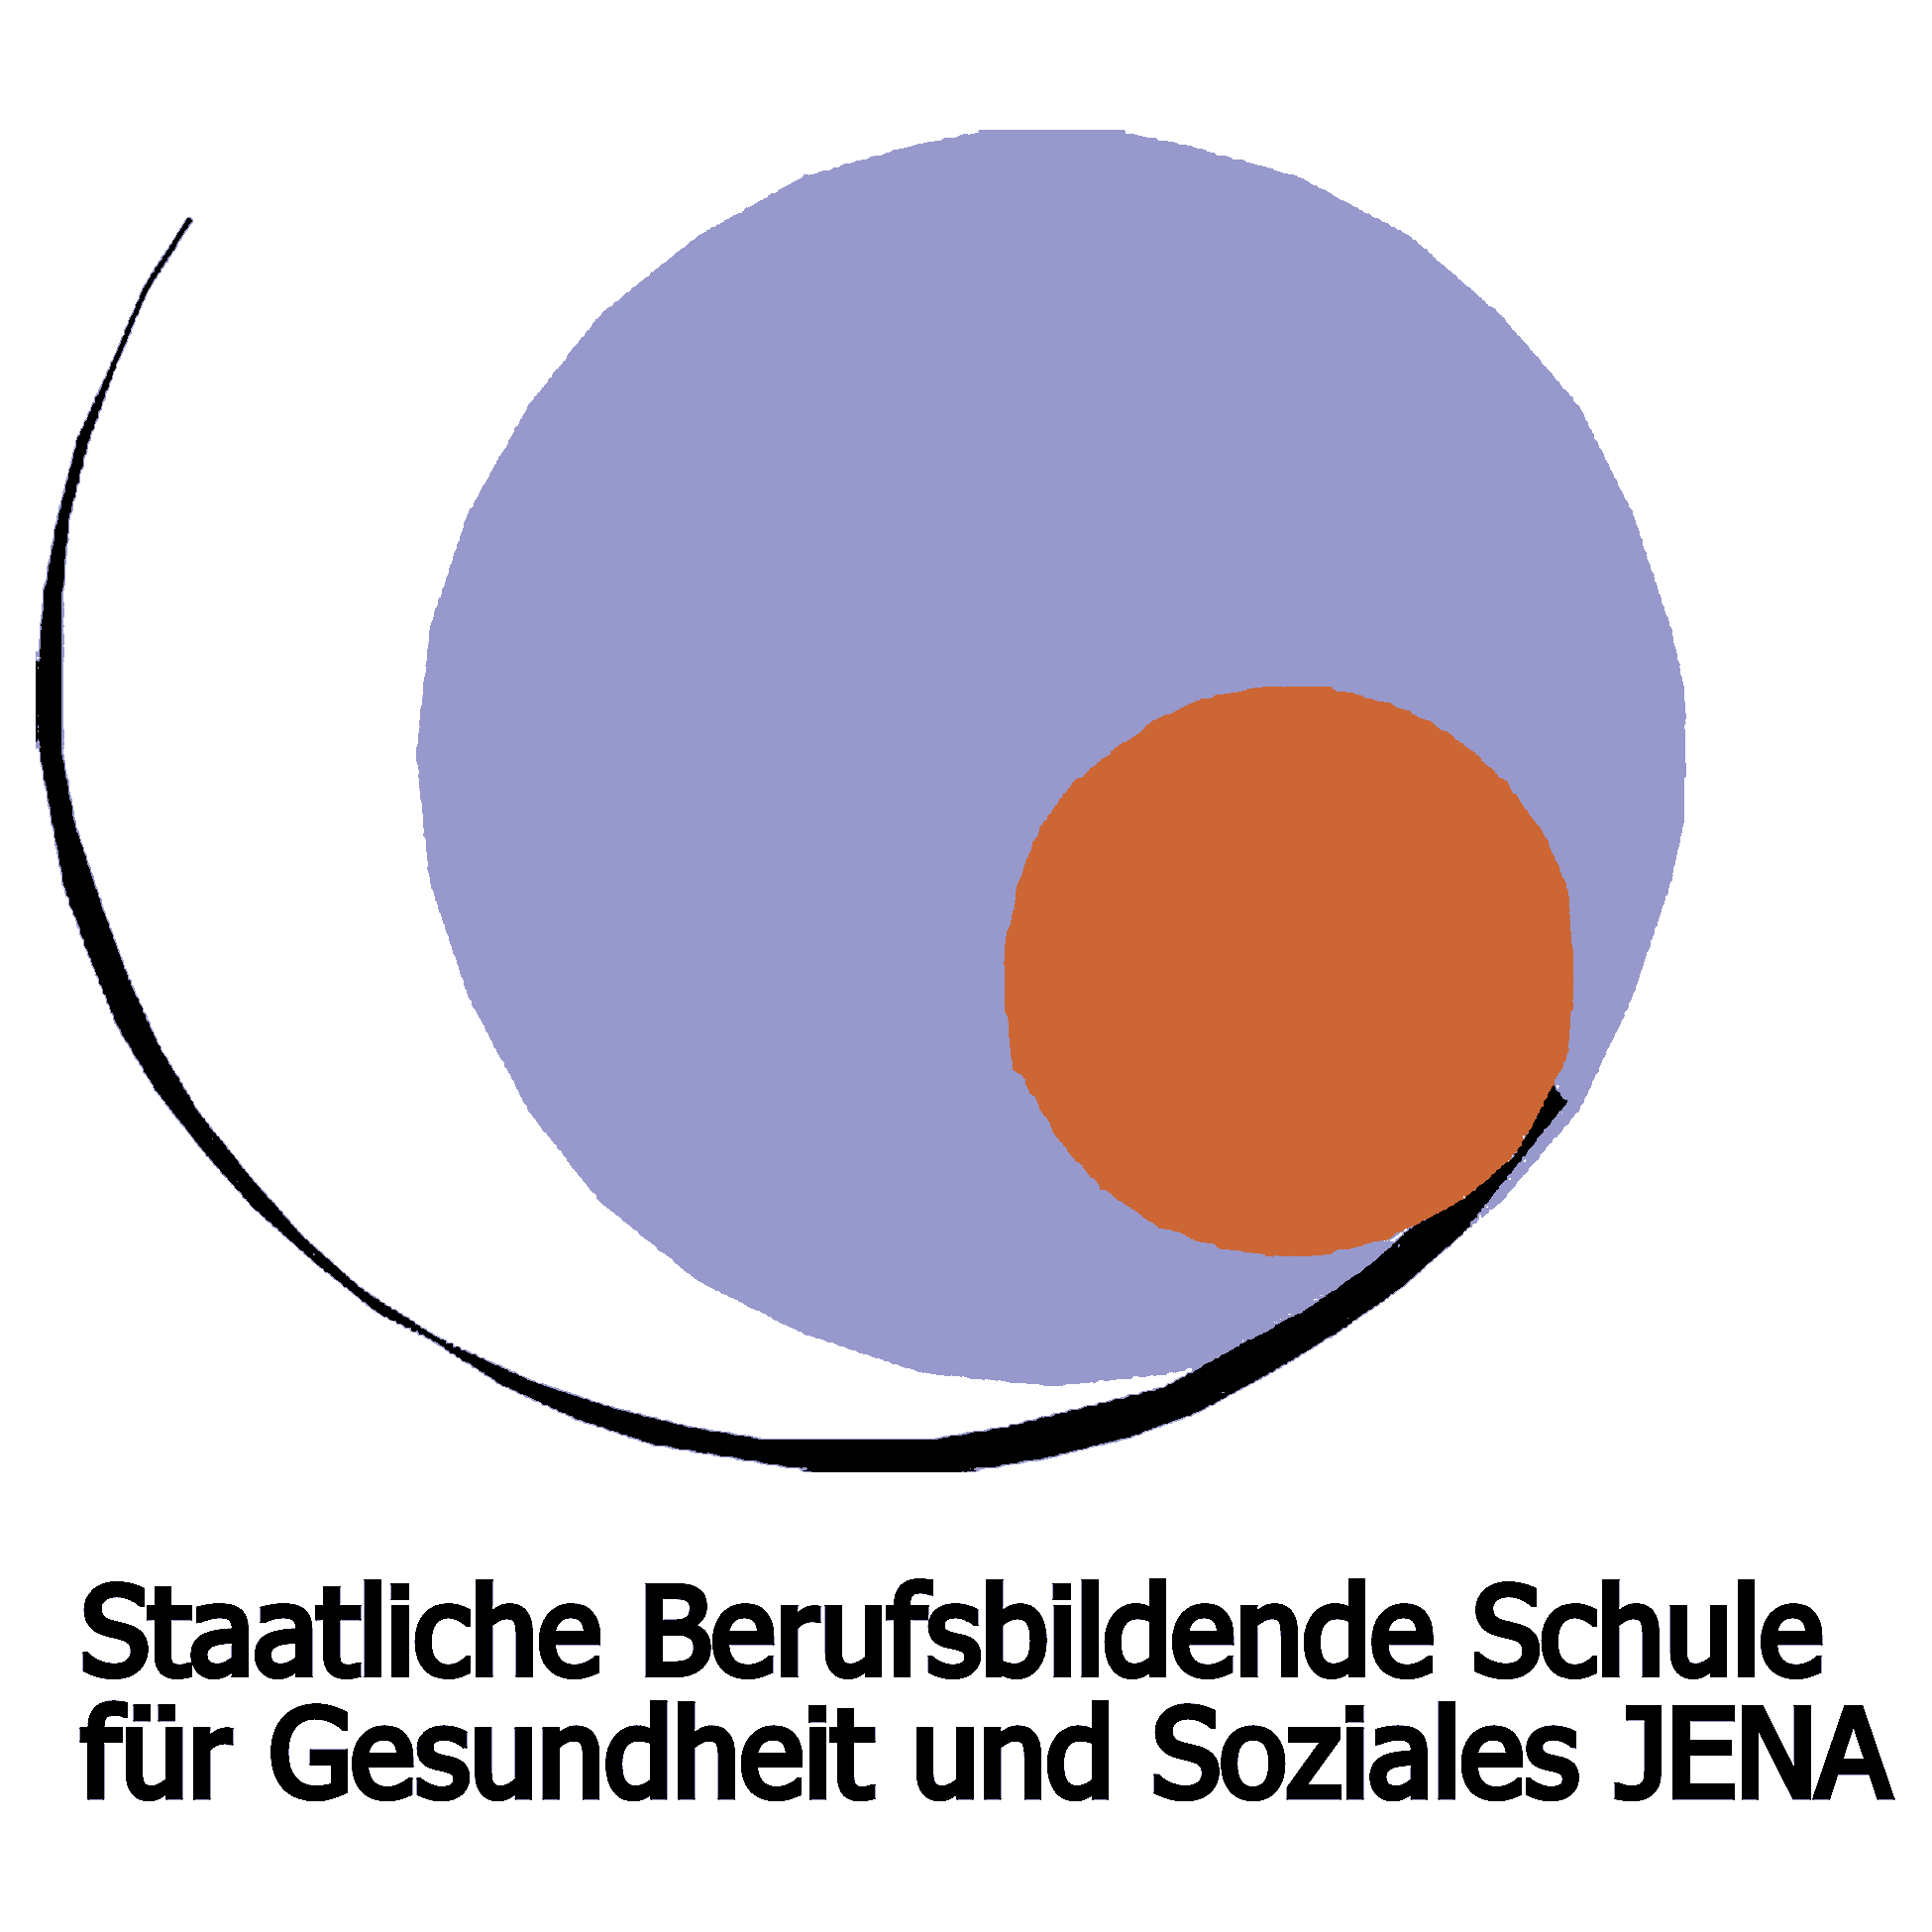 SBBS Jena